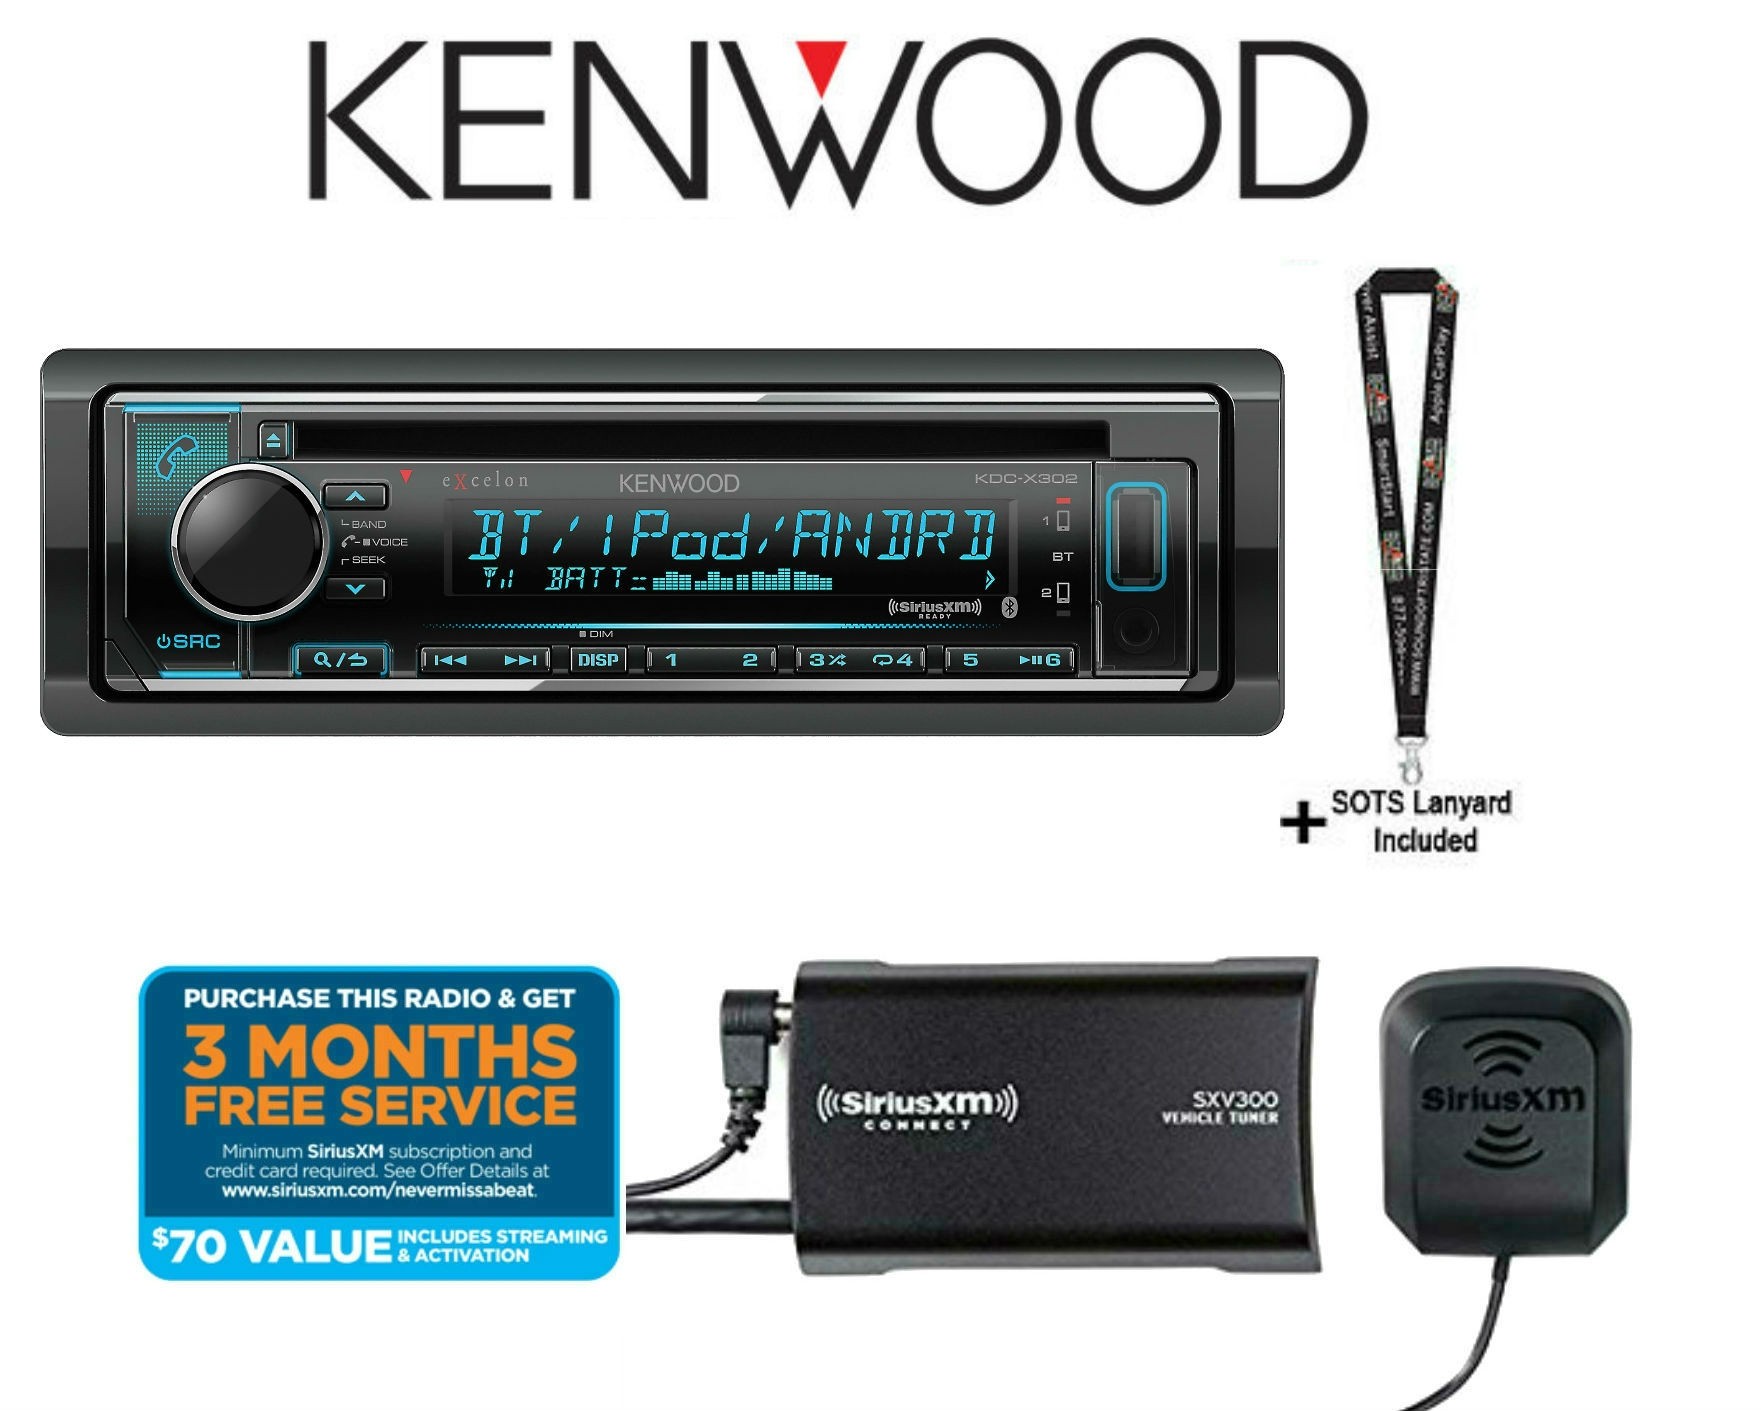 Kenwood Excelon Kdc-x799 User Manual